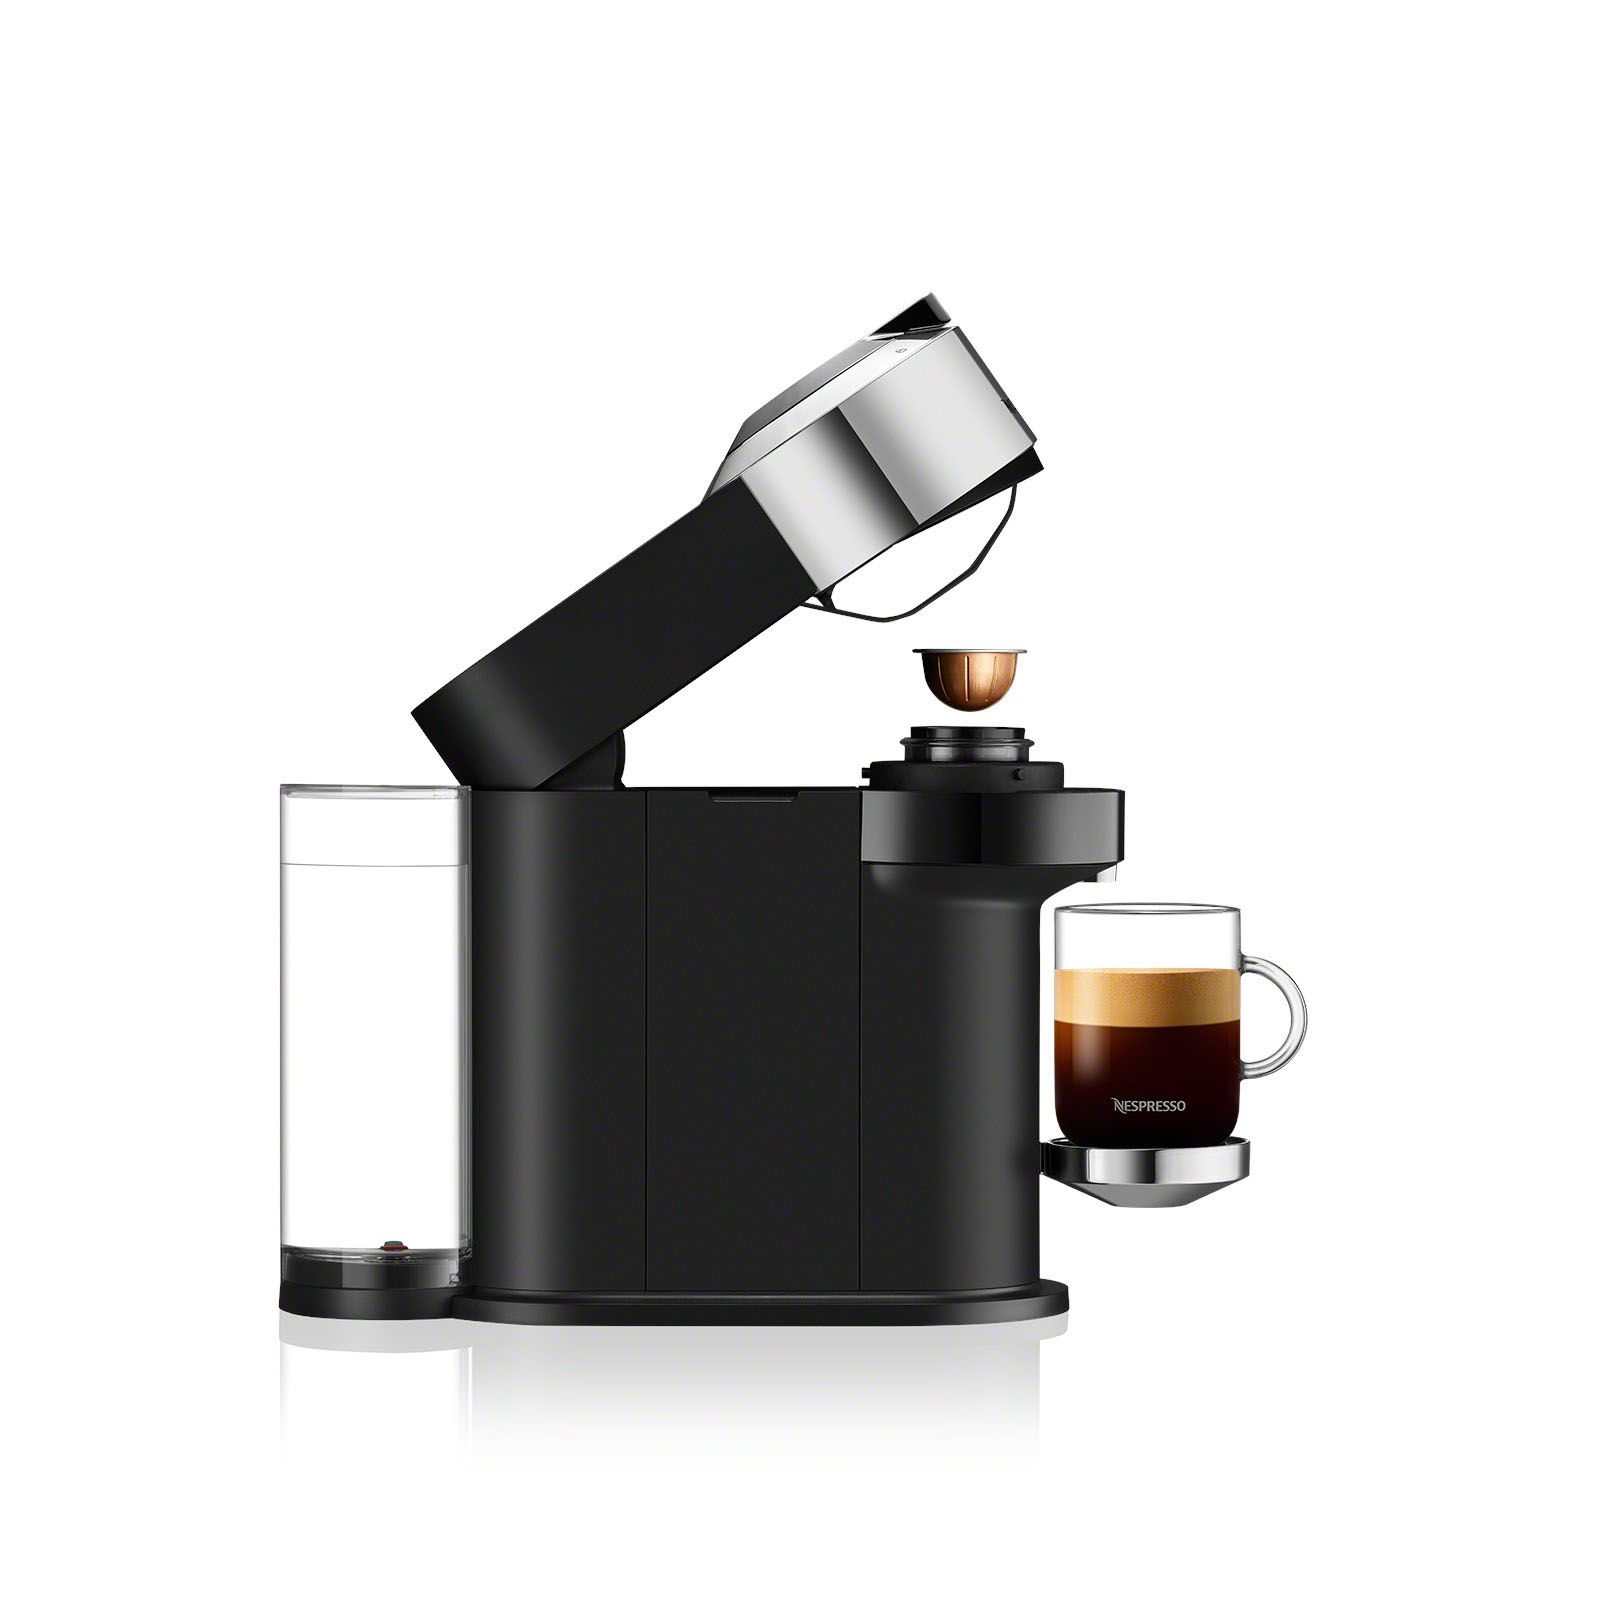 Magimix Nespresso Vertuo Next Deluxe : meilleur prix, test et